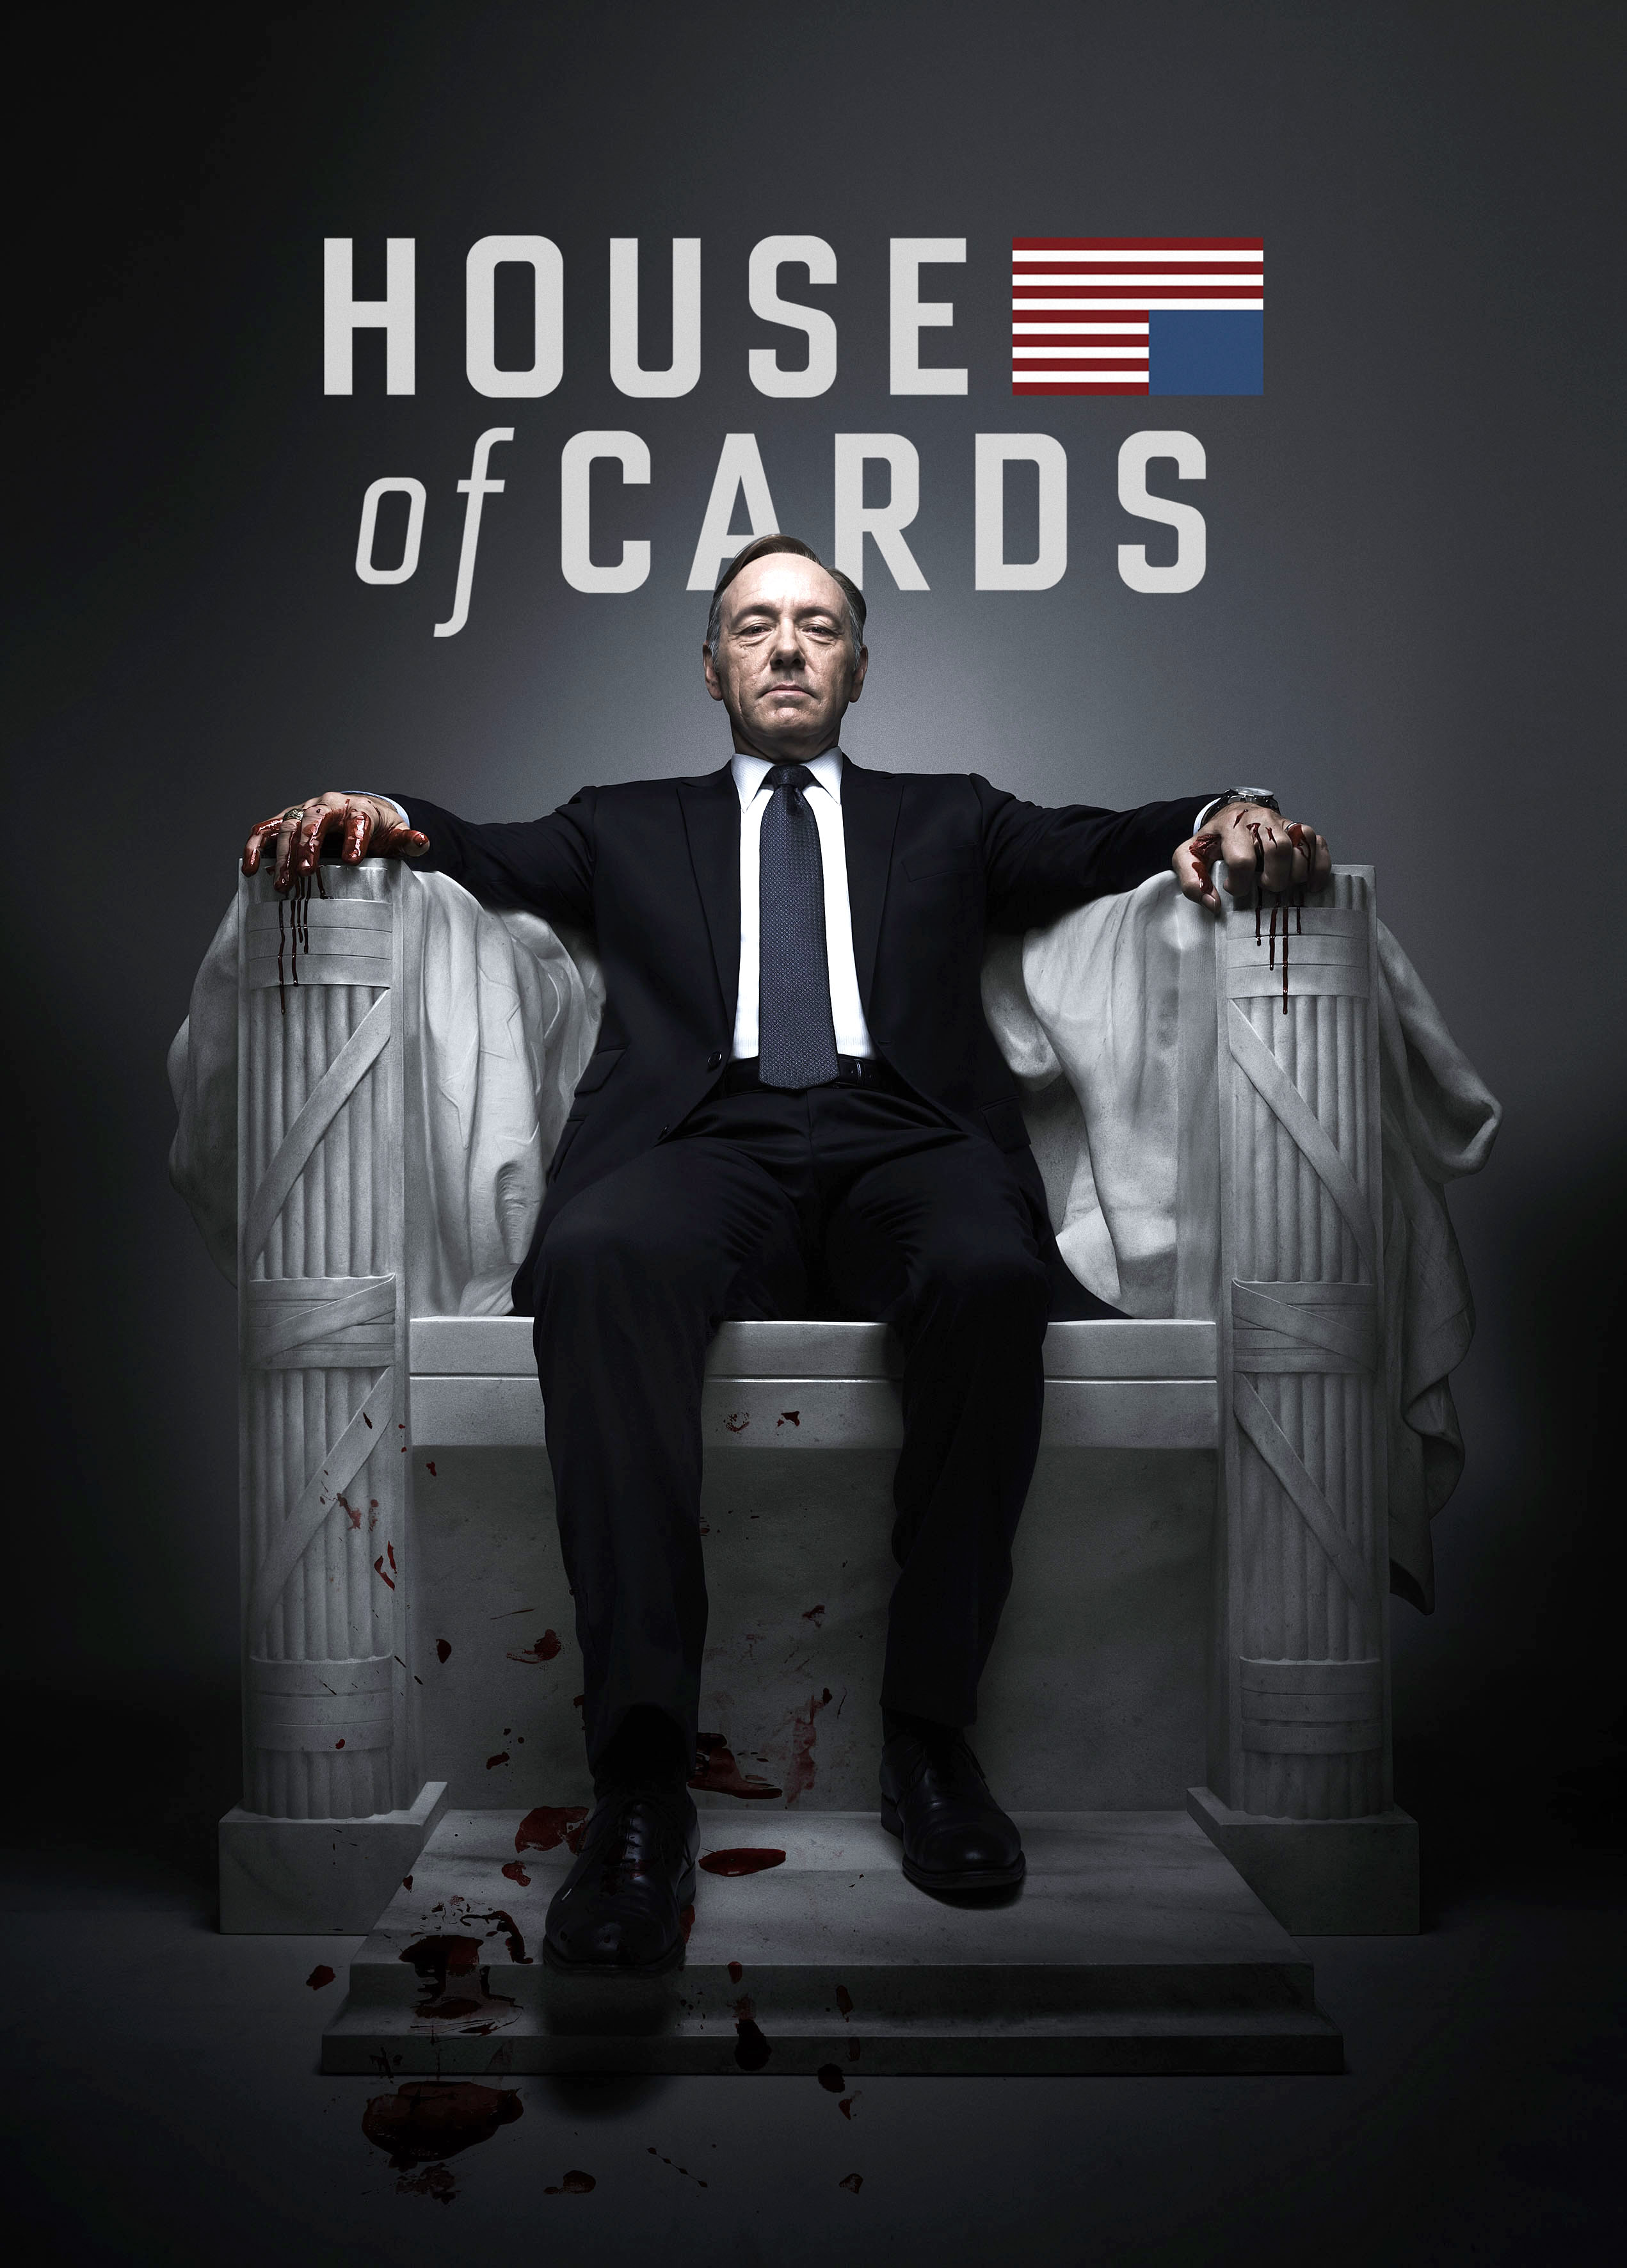 Résultats concours : House of Cards, 2 Blu-ray et 1 DVD gagnés.